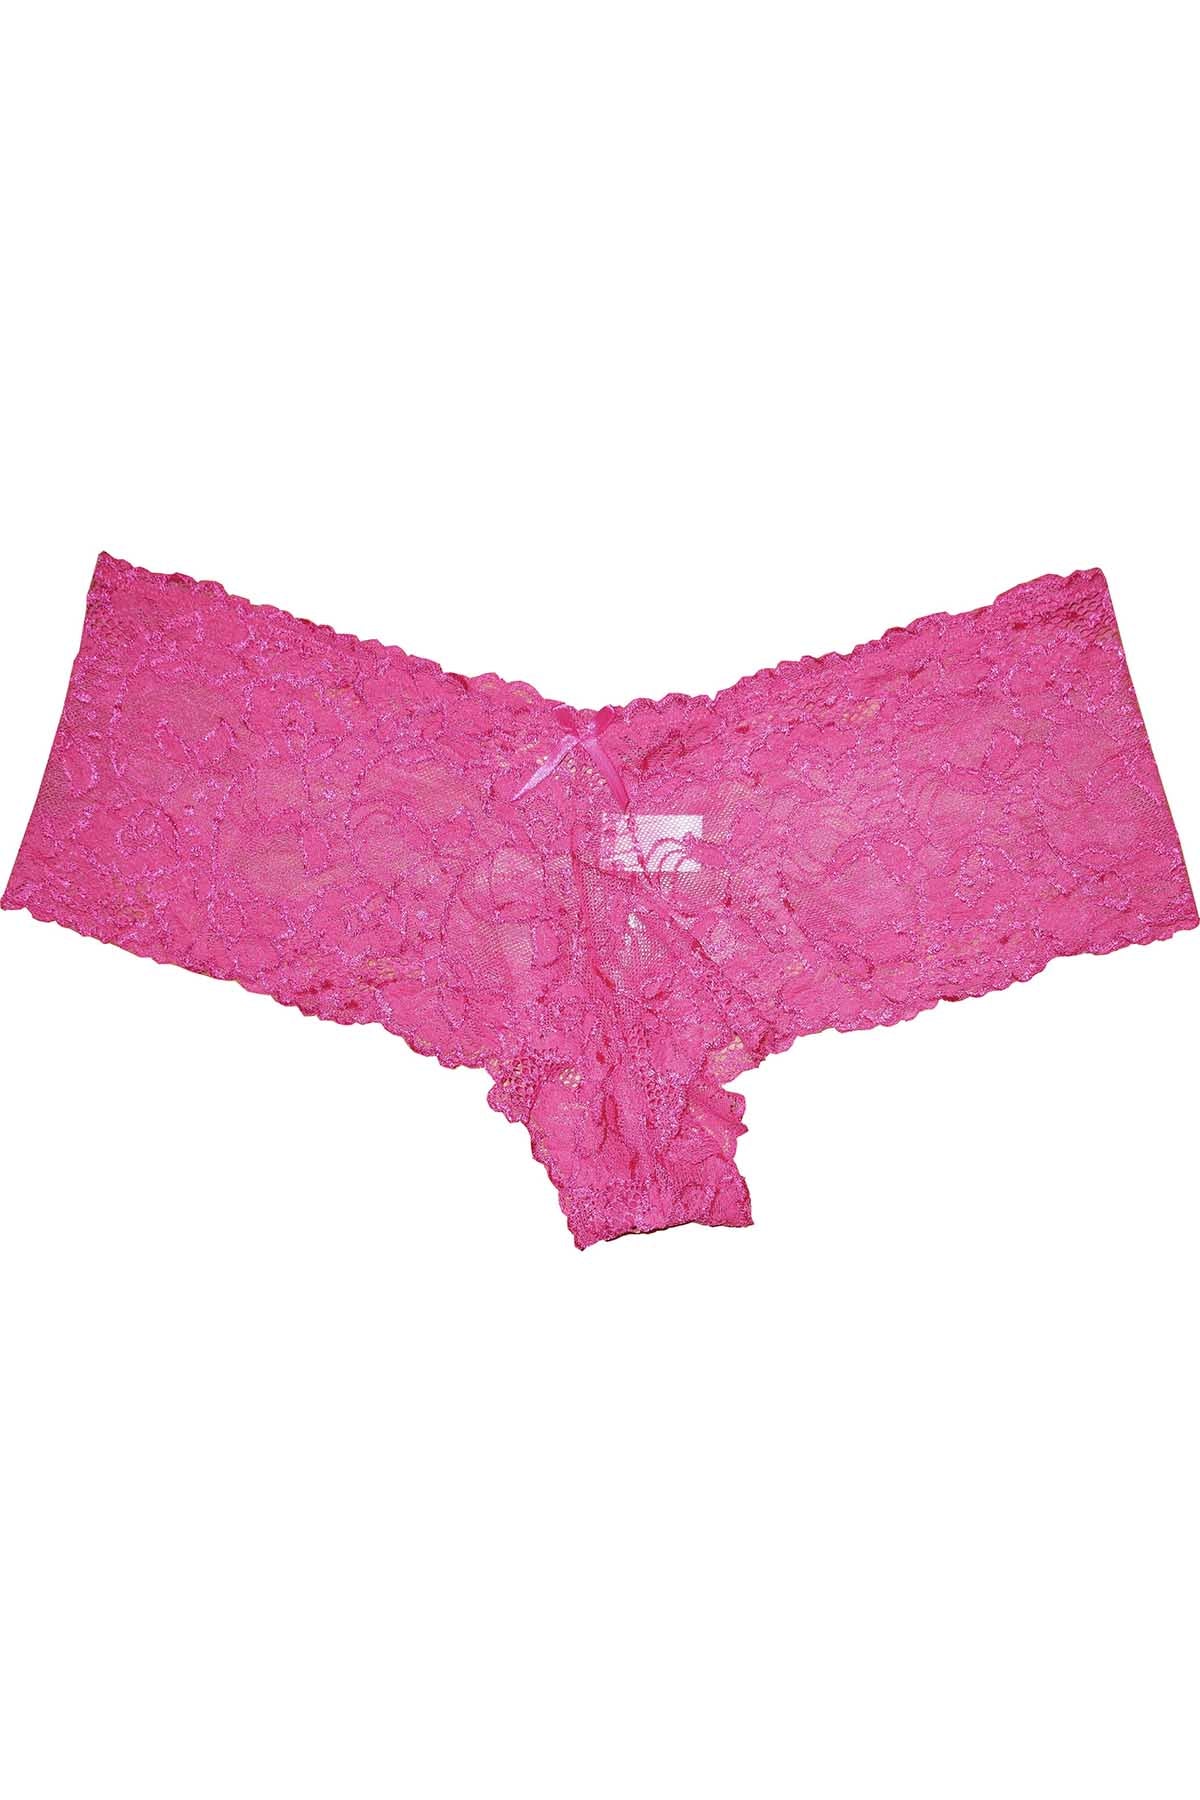 Linda Hartman PLUS Fuchsia-Pink Lace Bootyshort